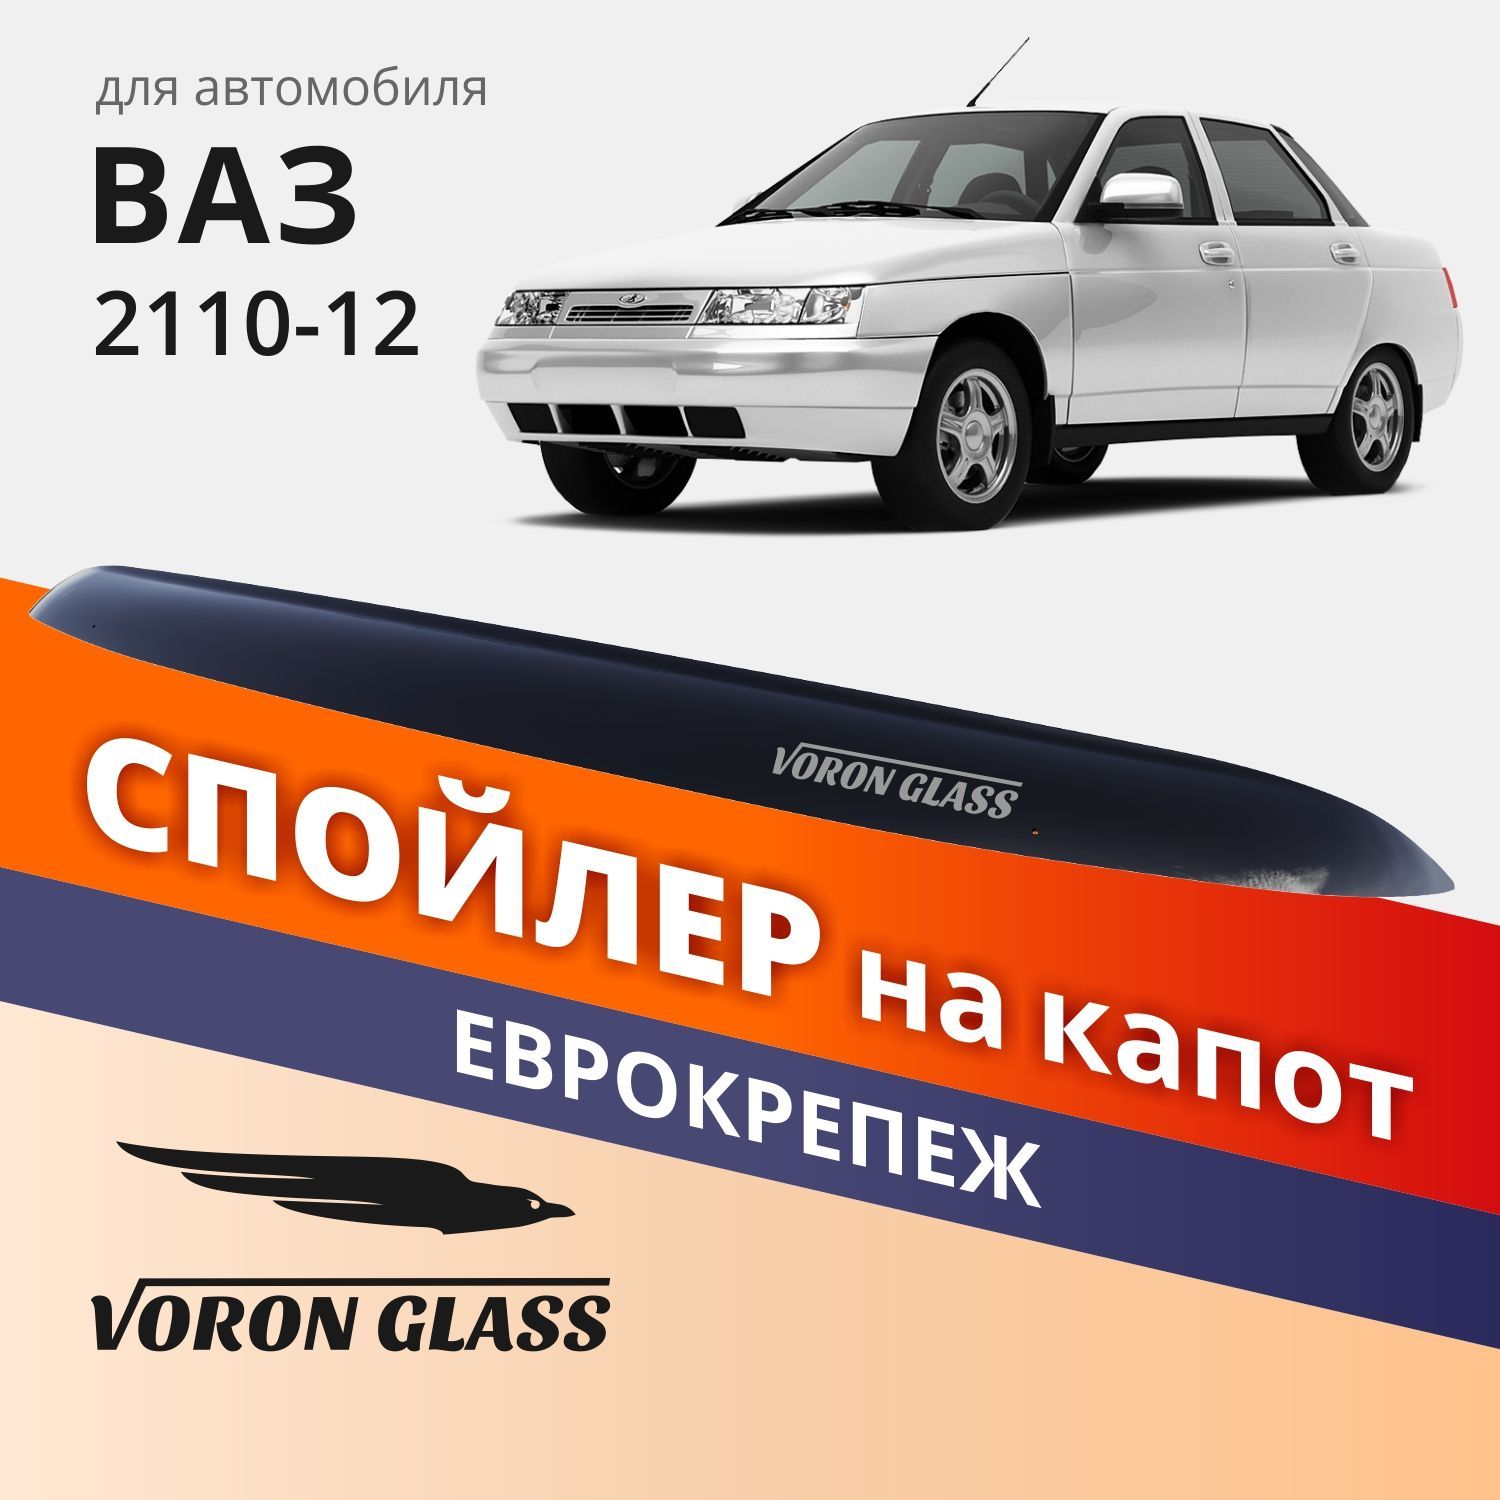 Спойлер На Капот Ваз 2110-12 Еврокрепеж Поликарбонат Voron Glass Муx00026 Voron Glass арт.